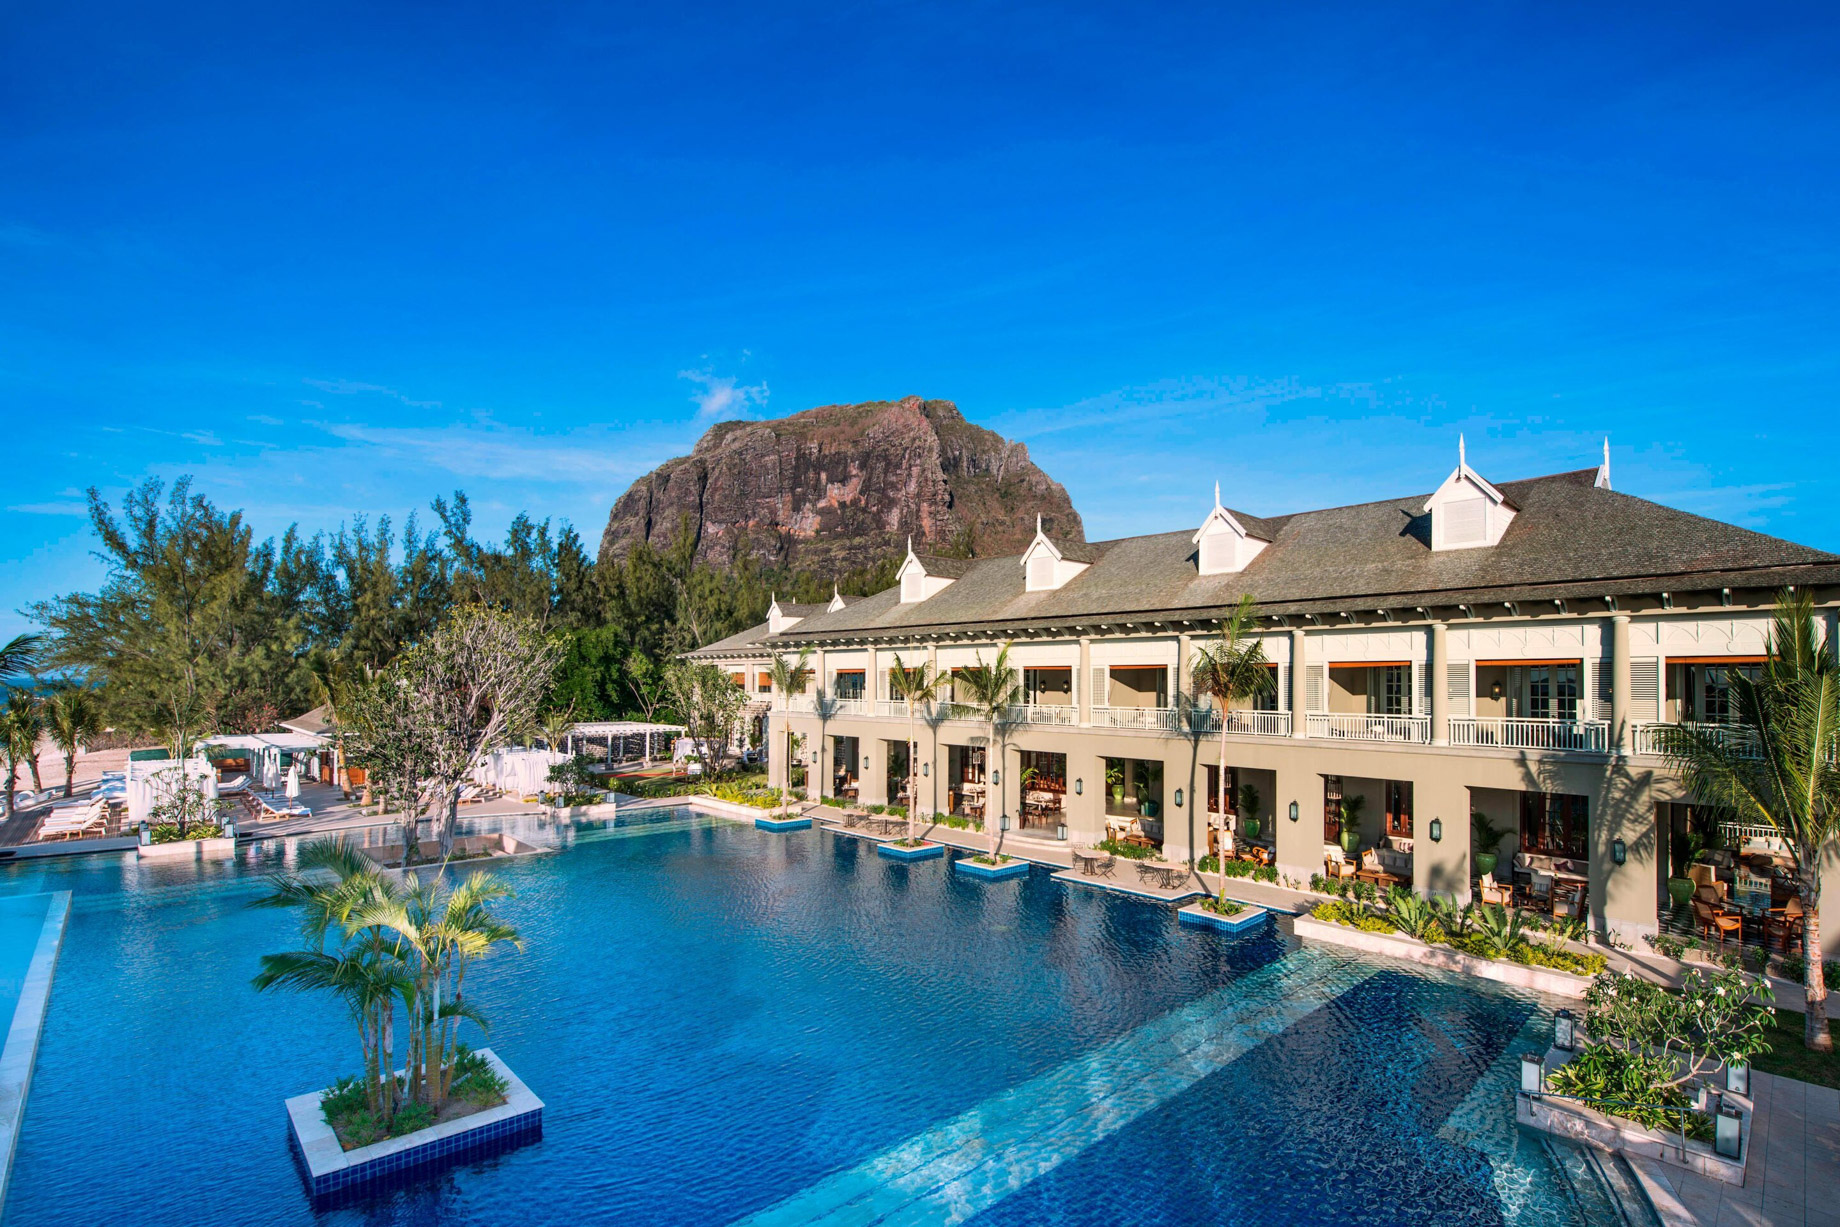 JW Marriott Mauritius Resort - Mauritius - Manor House and Main Pool